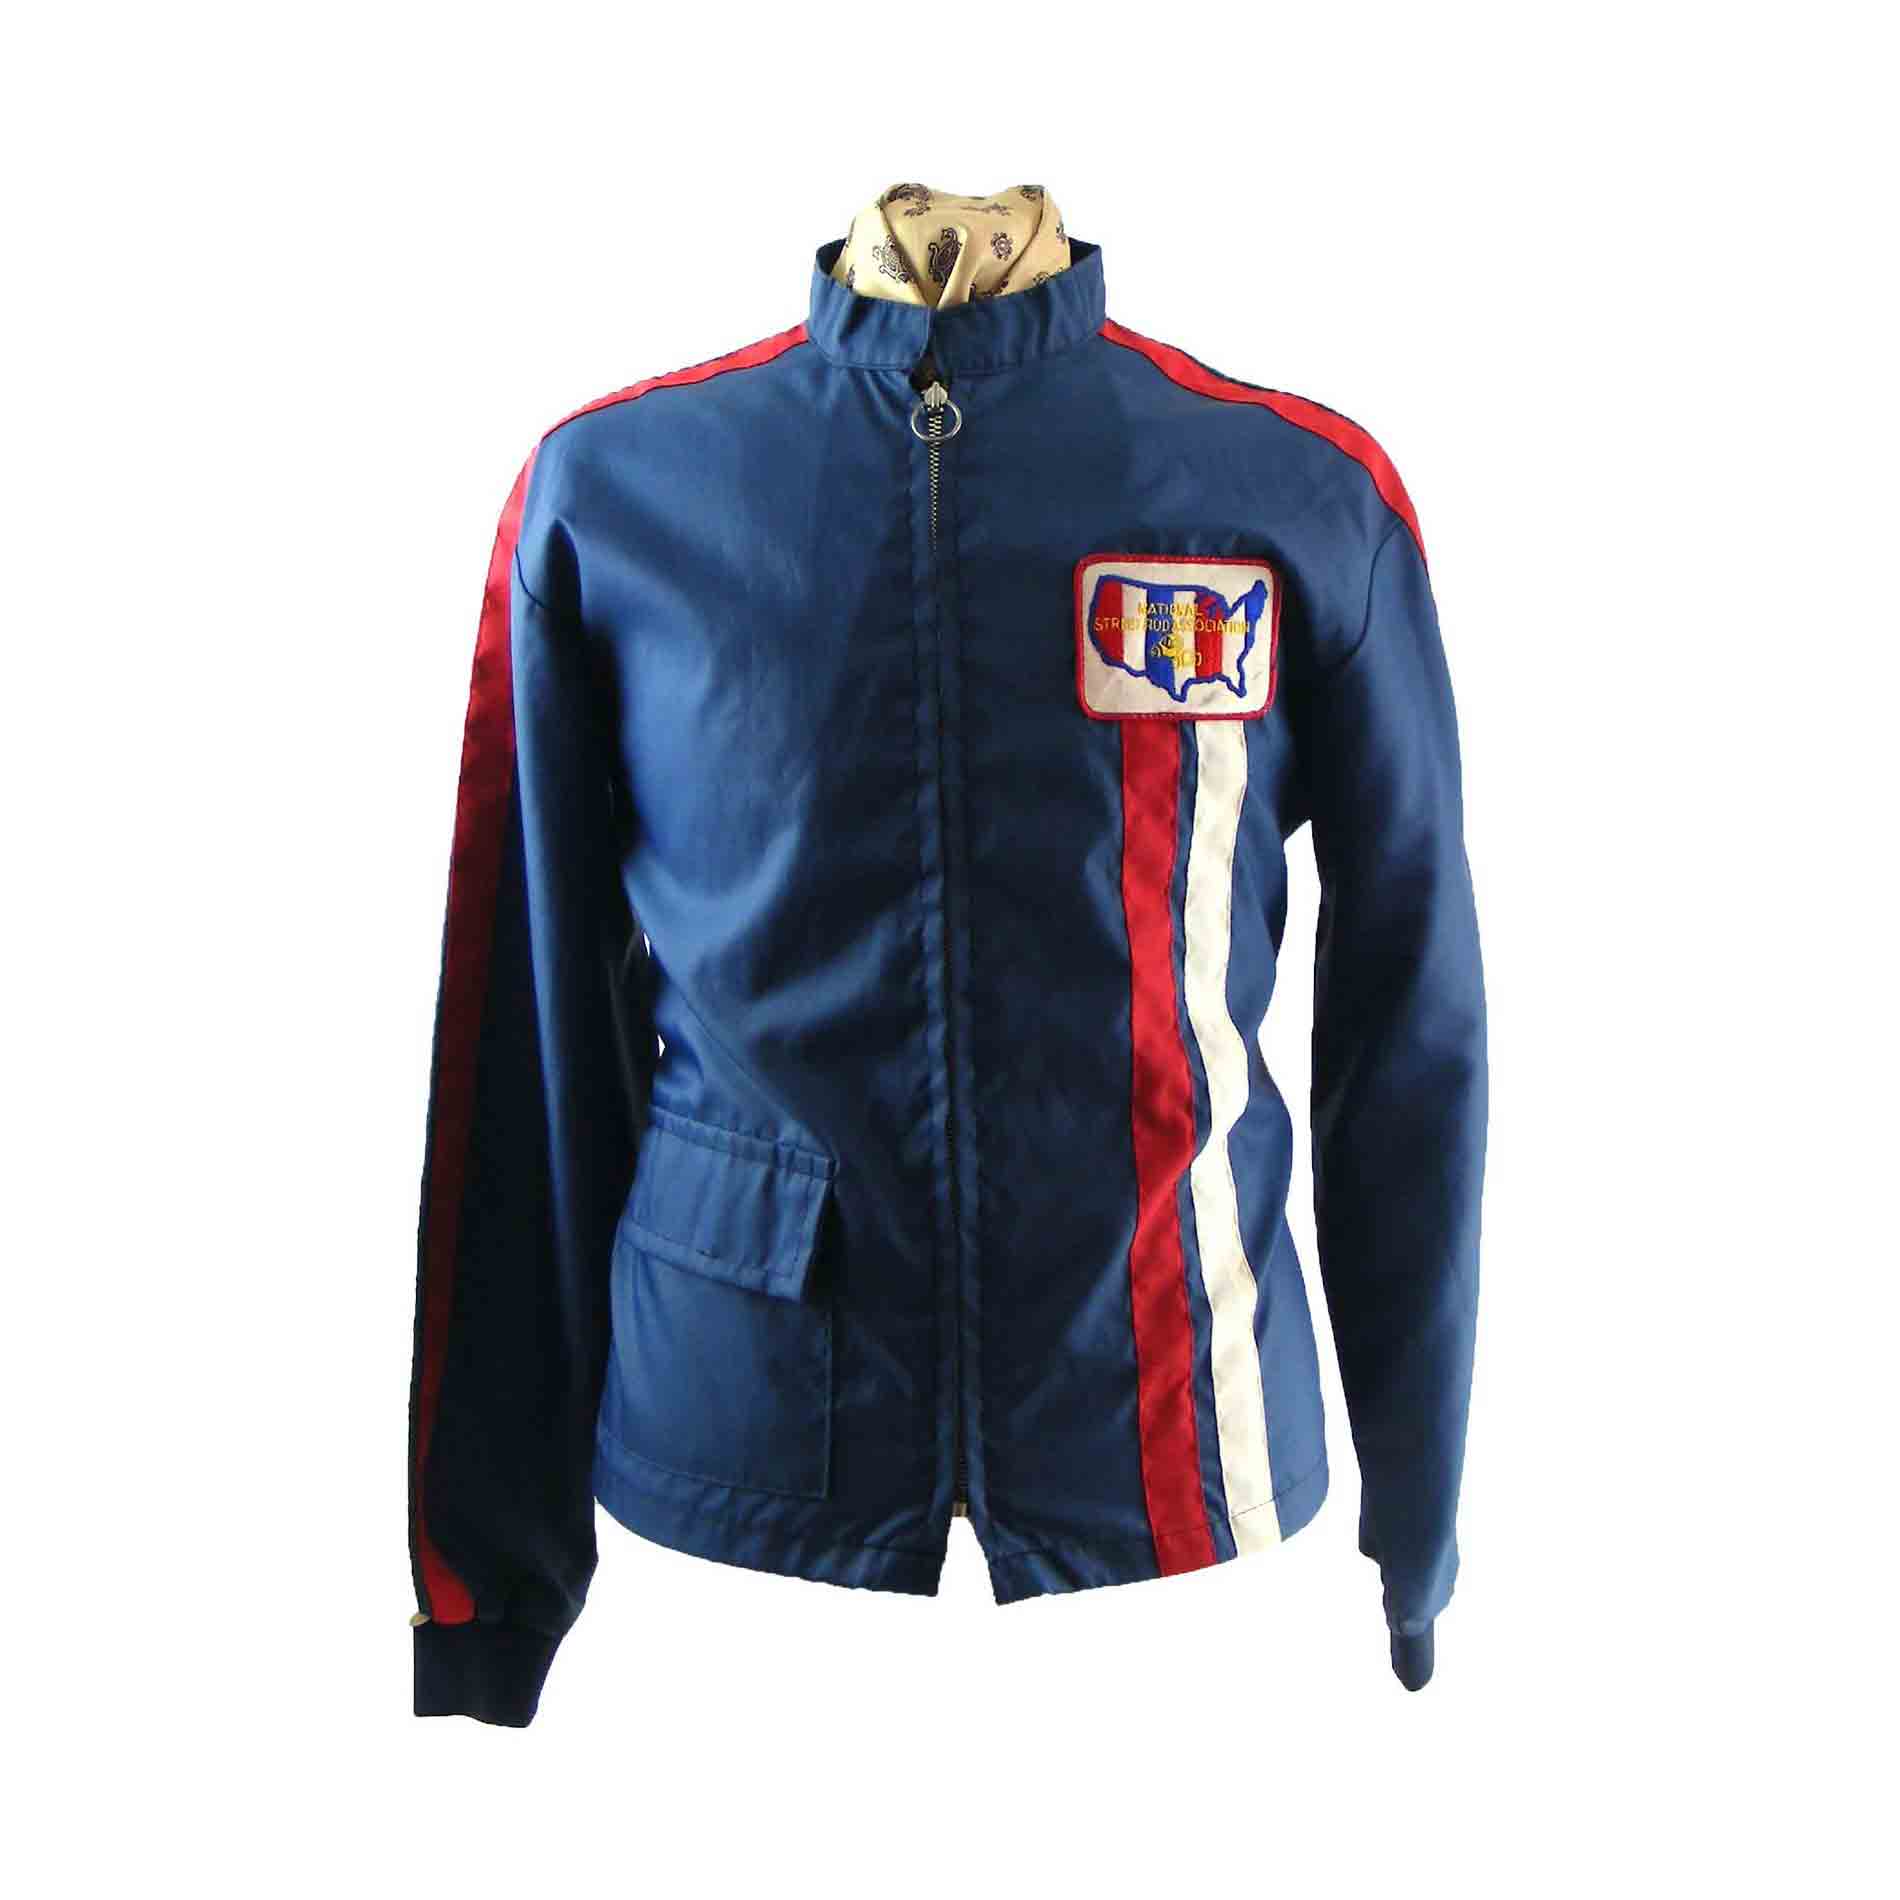 National street rod racing jacket - Blue 17 Vintage Clothing